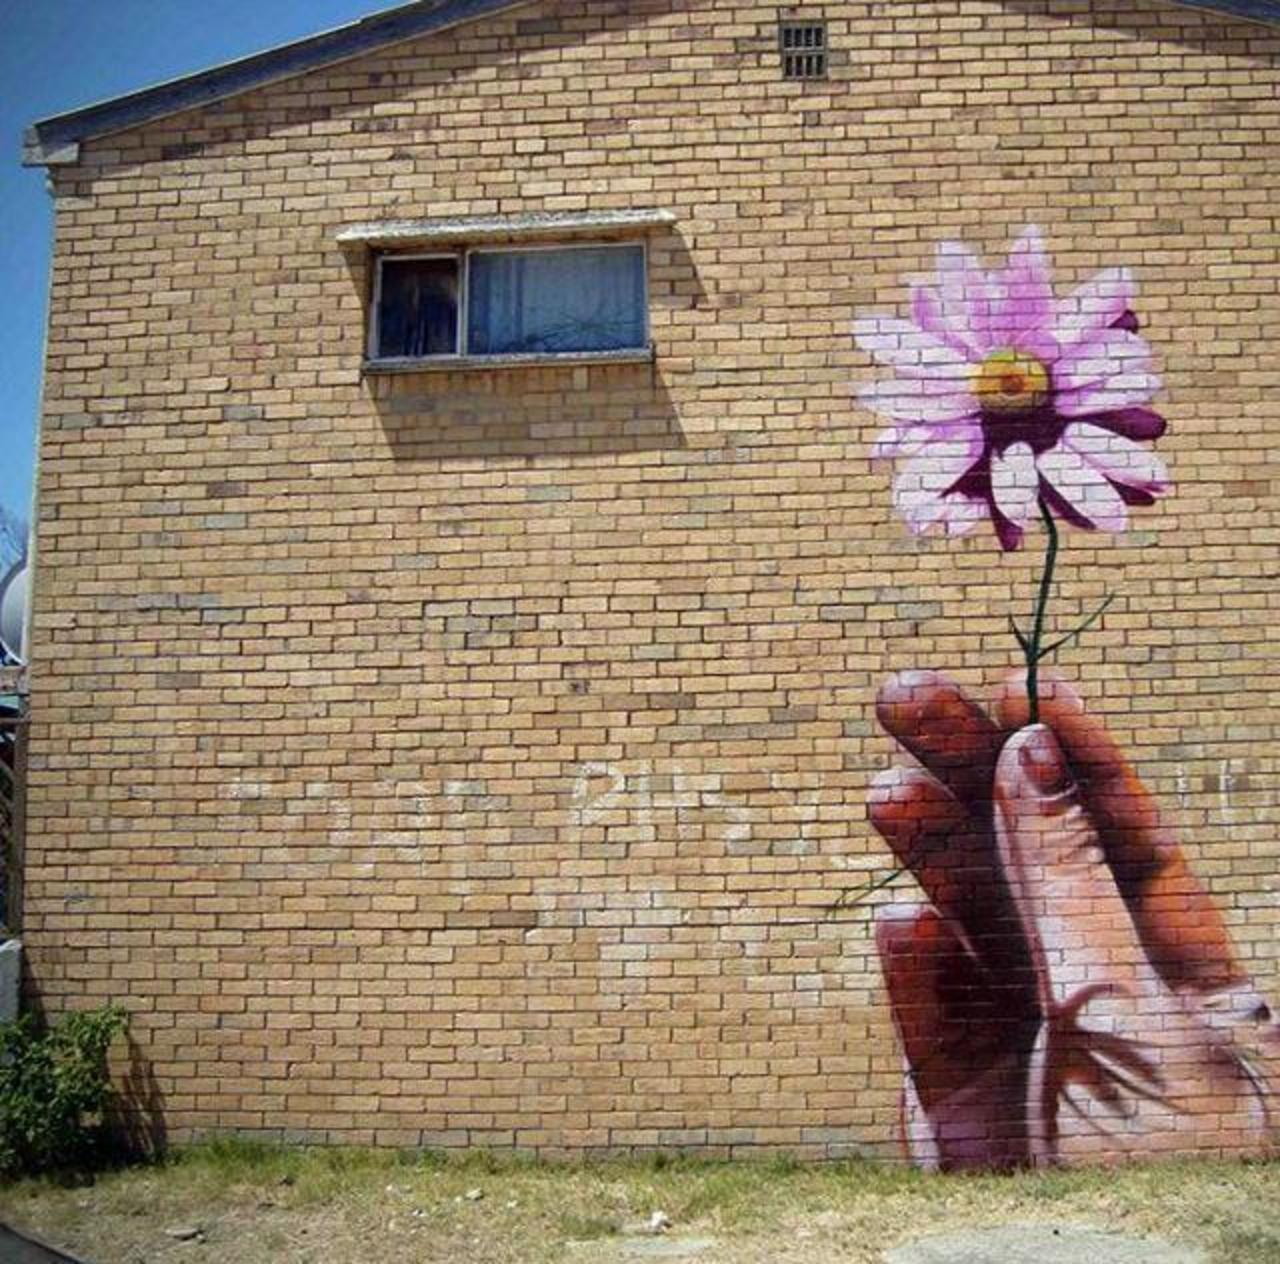 Street Art by Falco in Cape Town 

#art #arte #graffiti #streetart http://t.co/QukxuevBsU